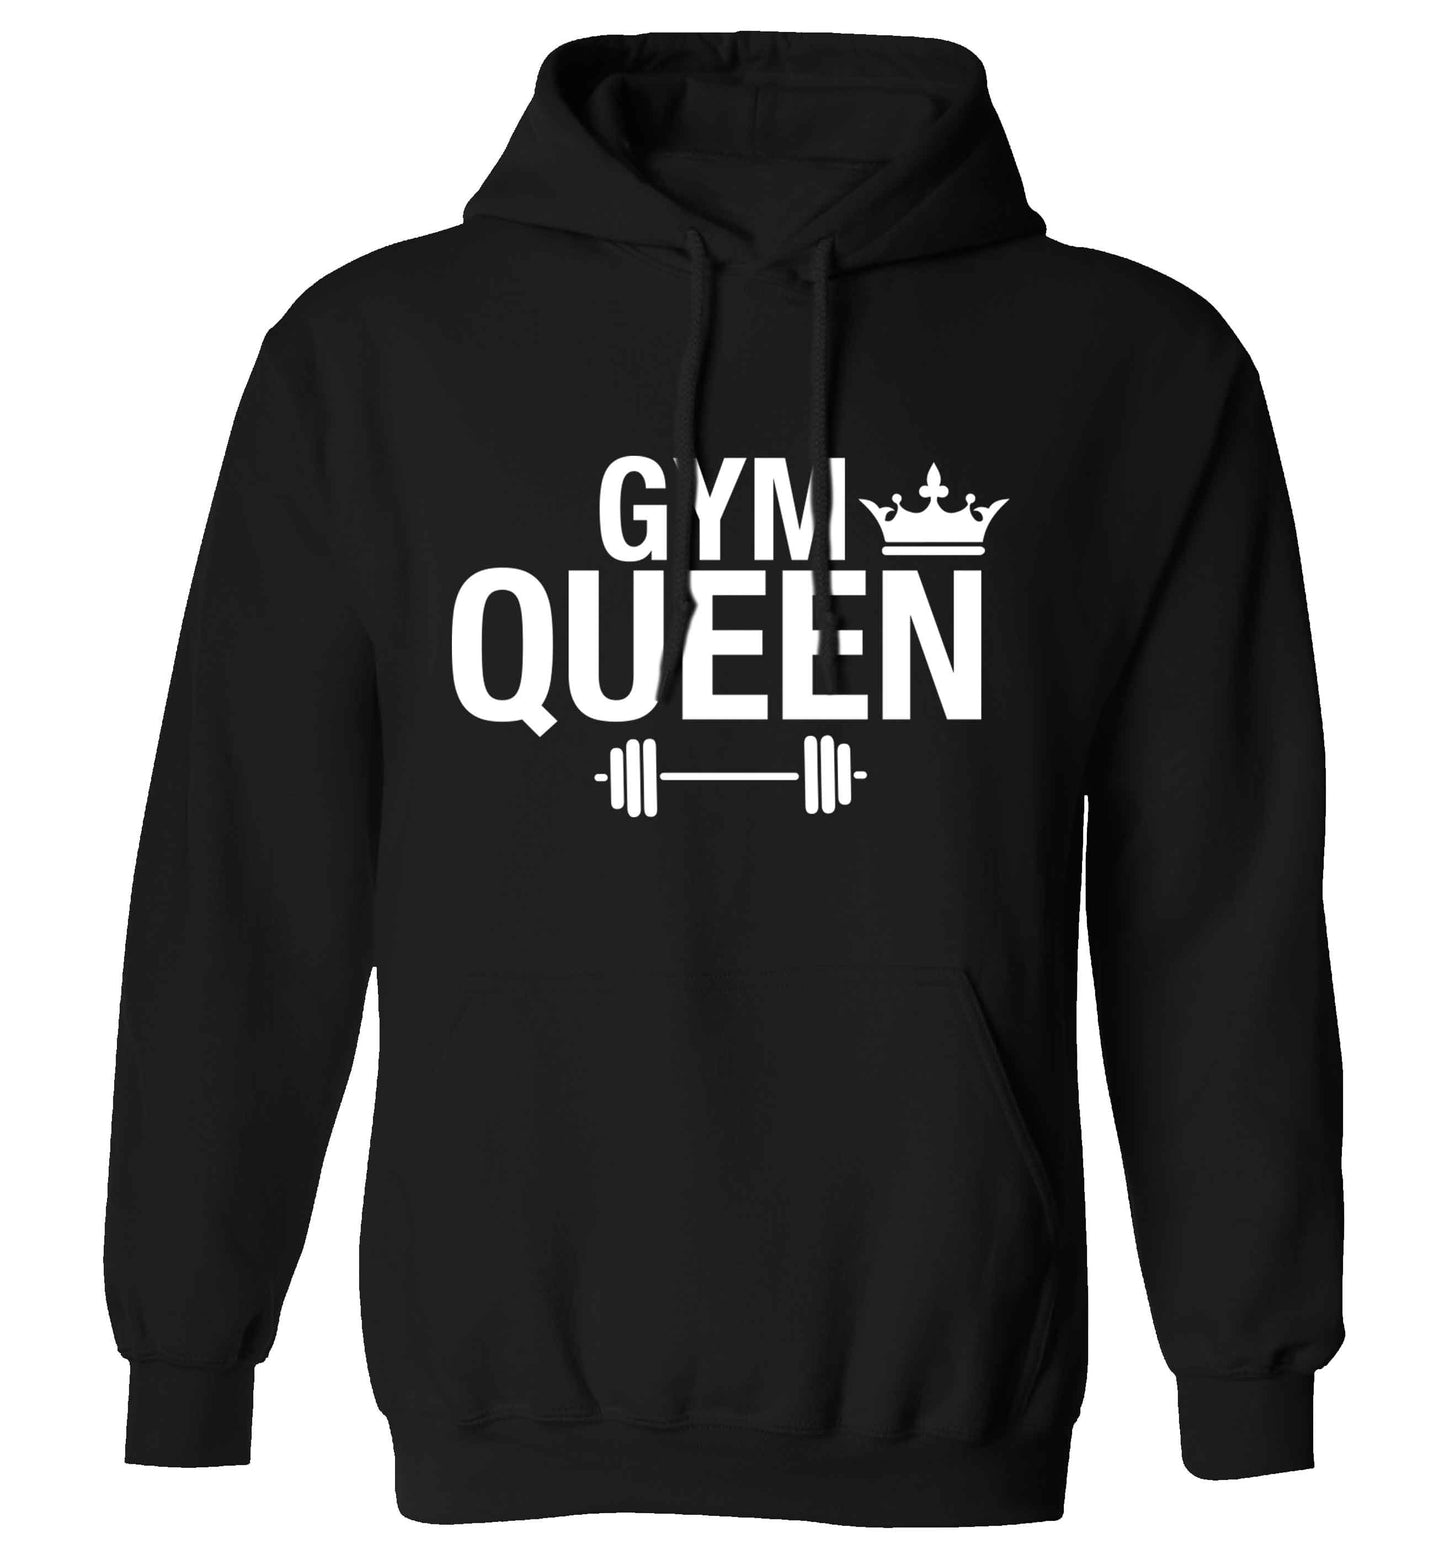 Gym queen adults unisex black hoodie 2XL